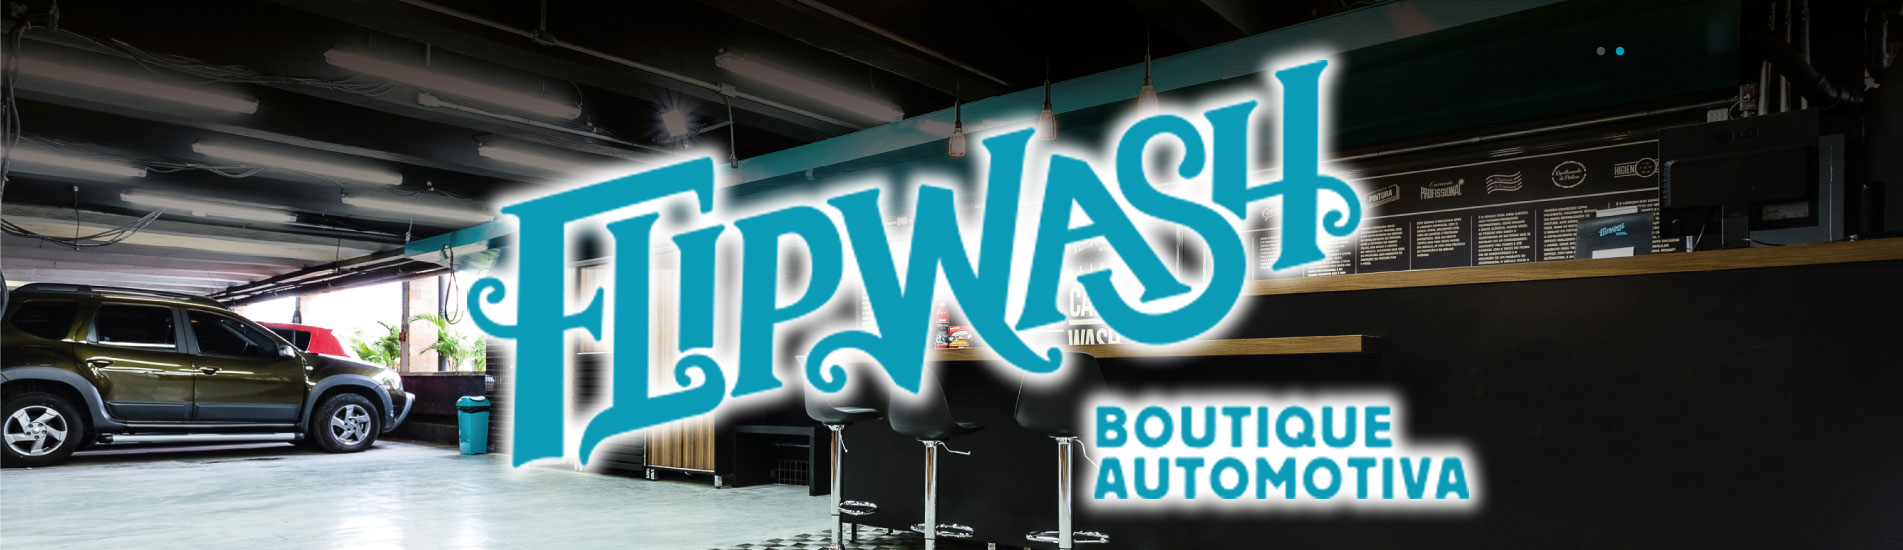 Boutique Automotiva Flipwash já está funcionando no Teresina Shopping.